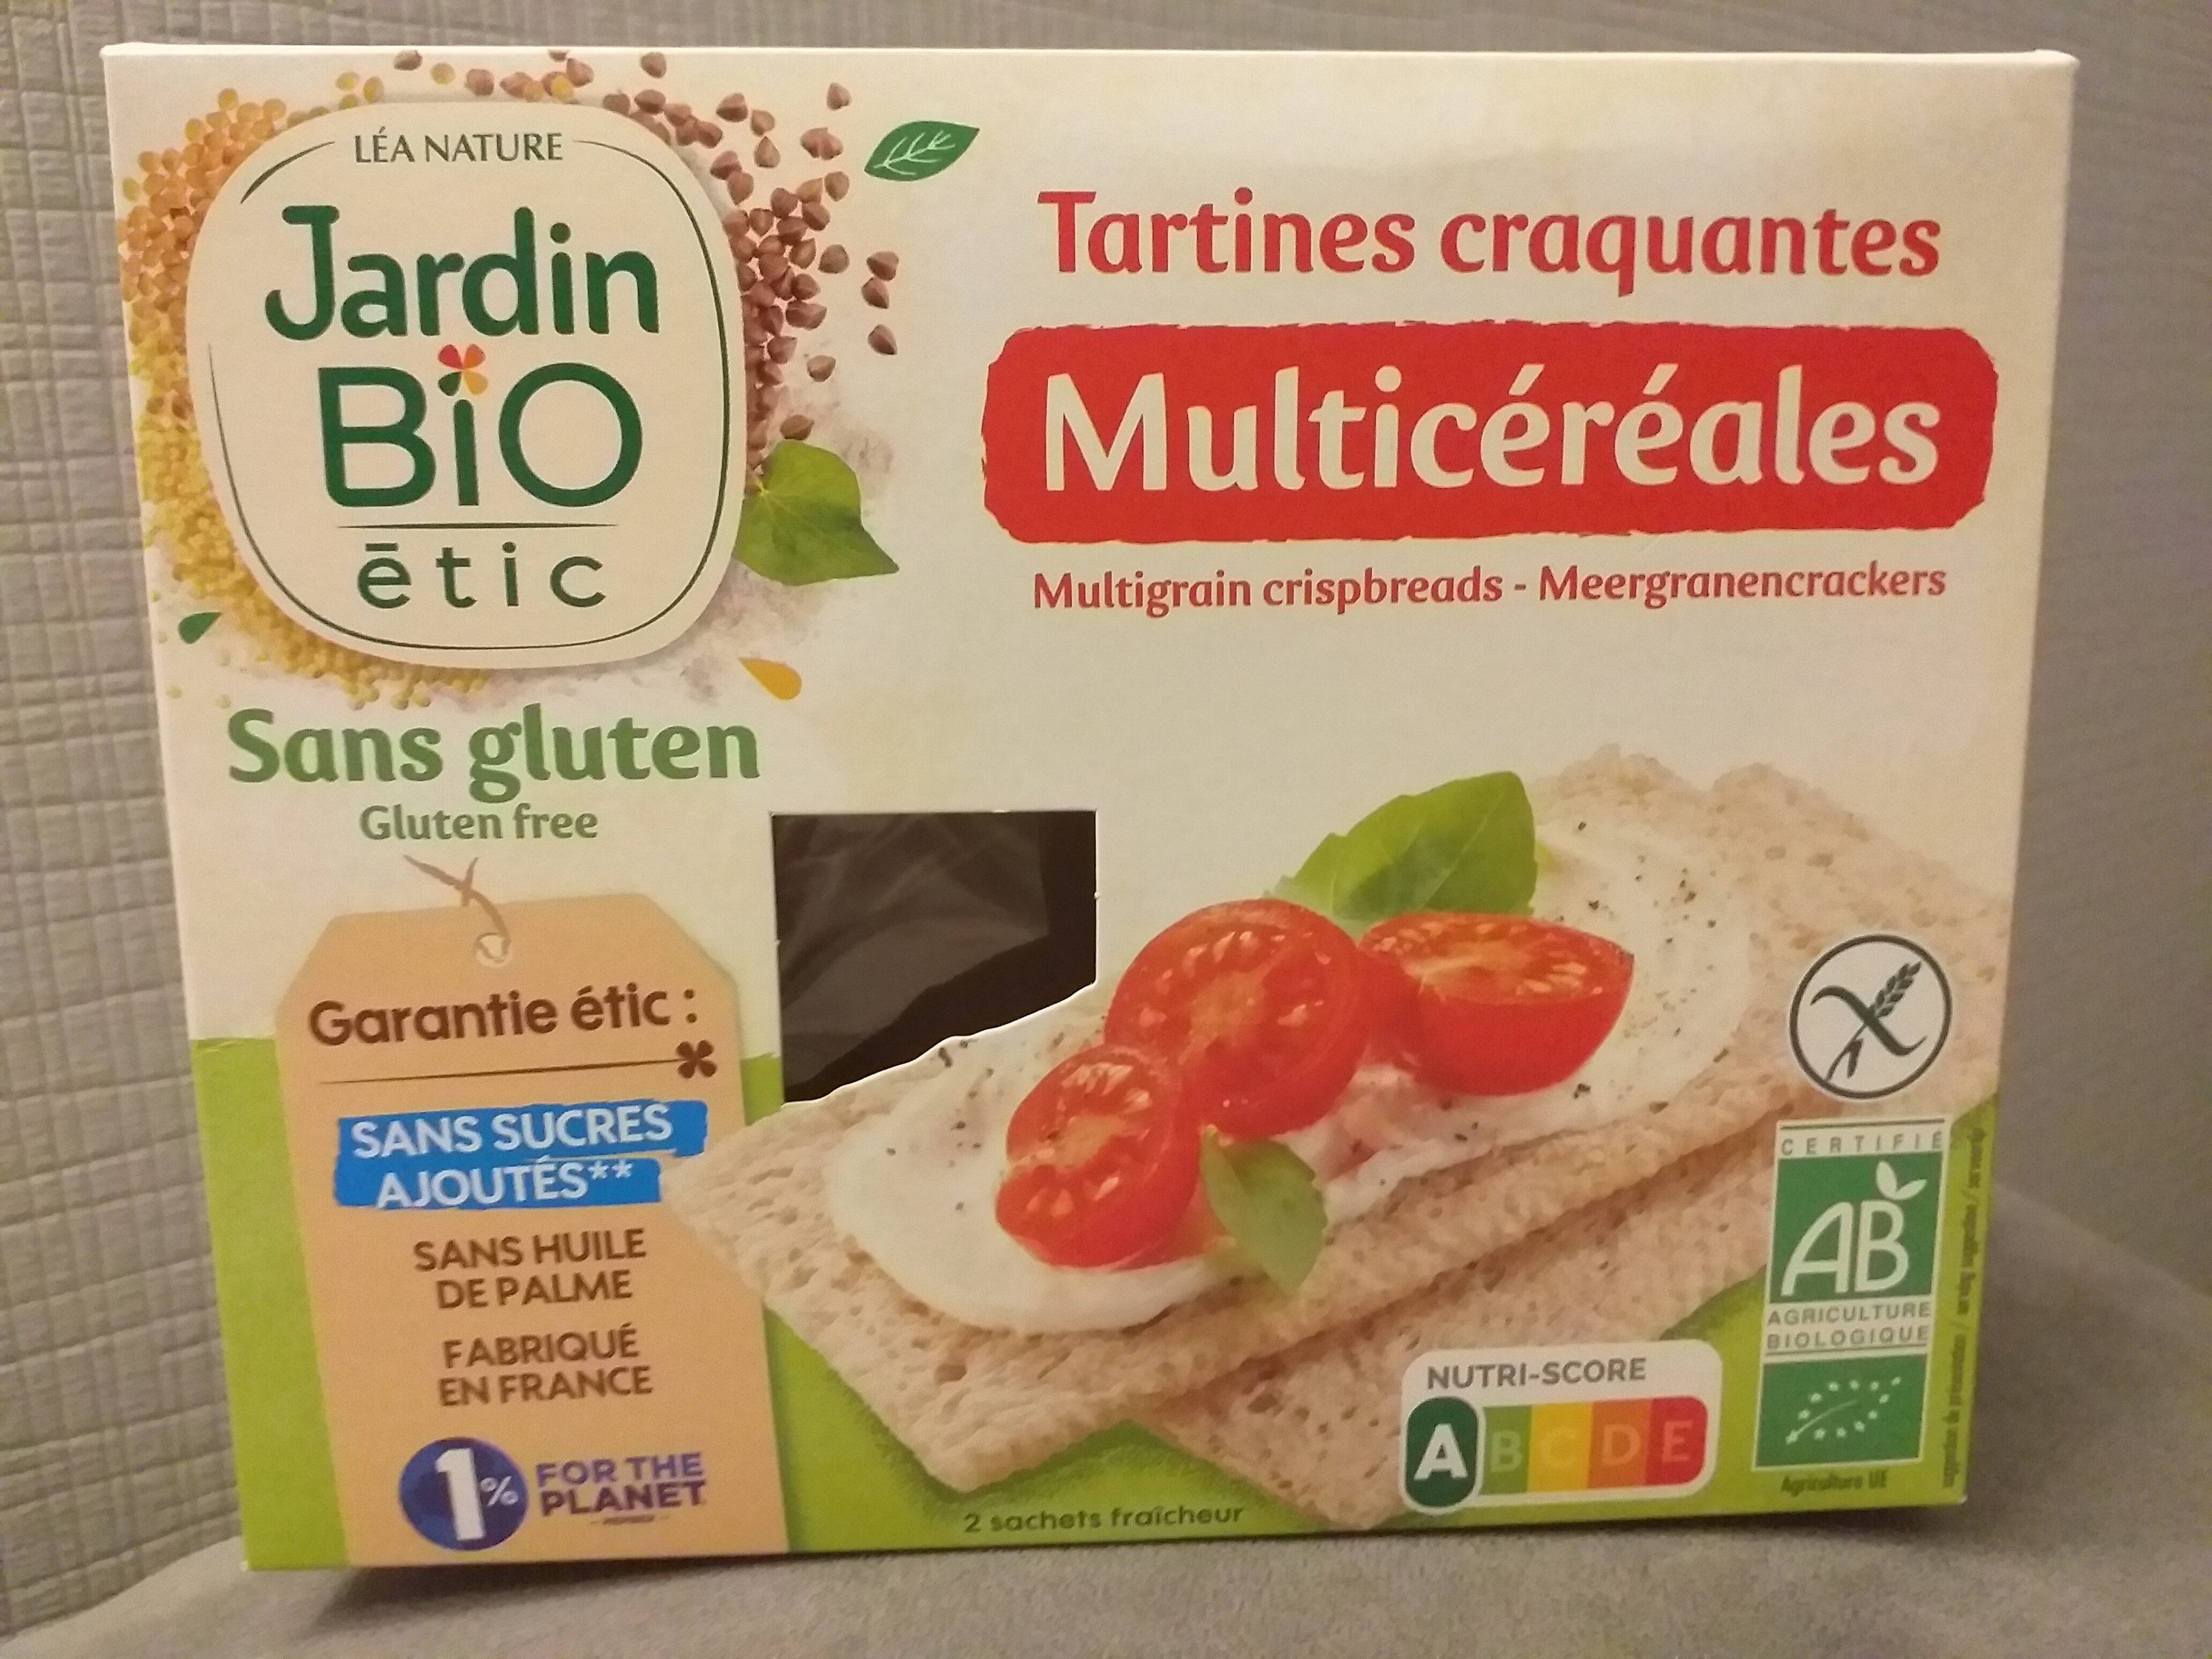 Tartines craquantes Multicéréales - Produit